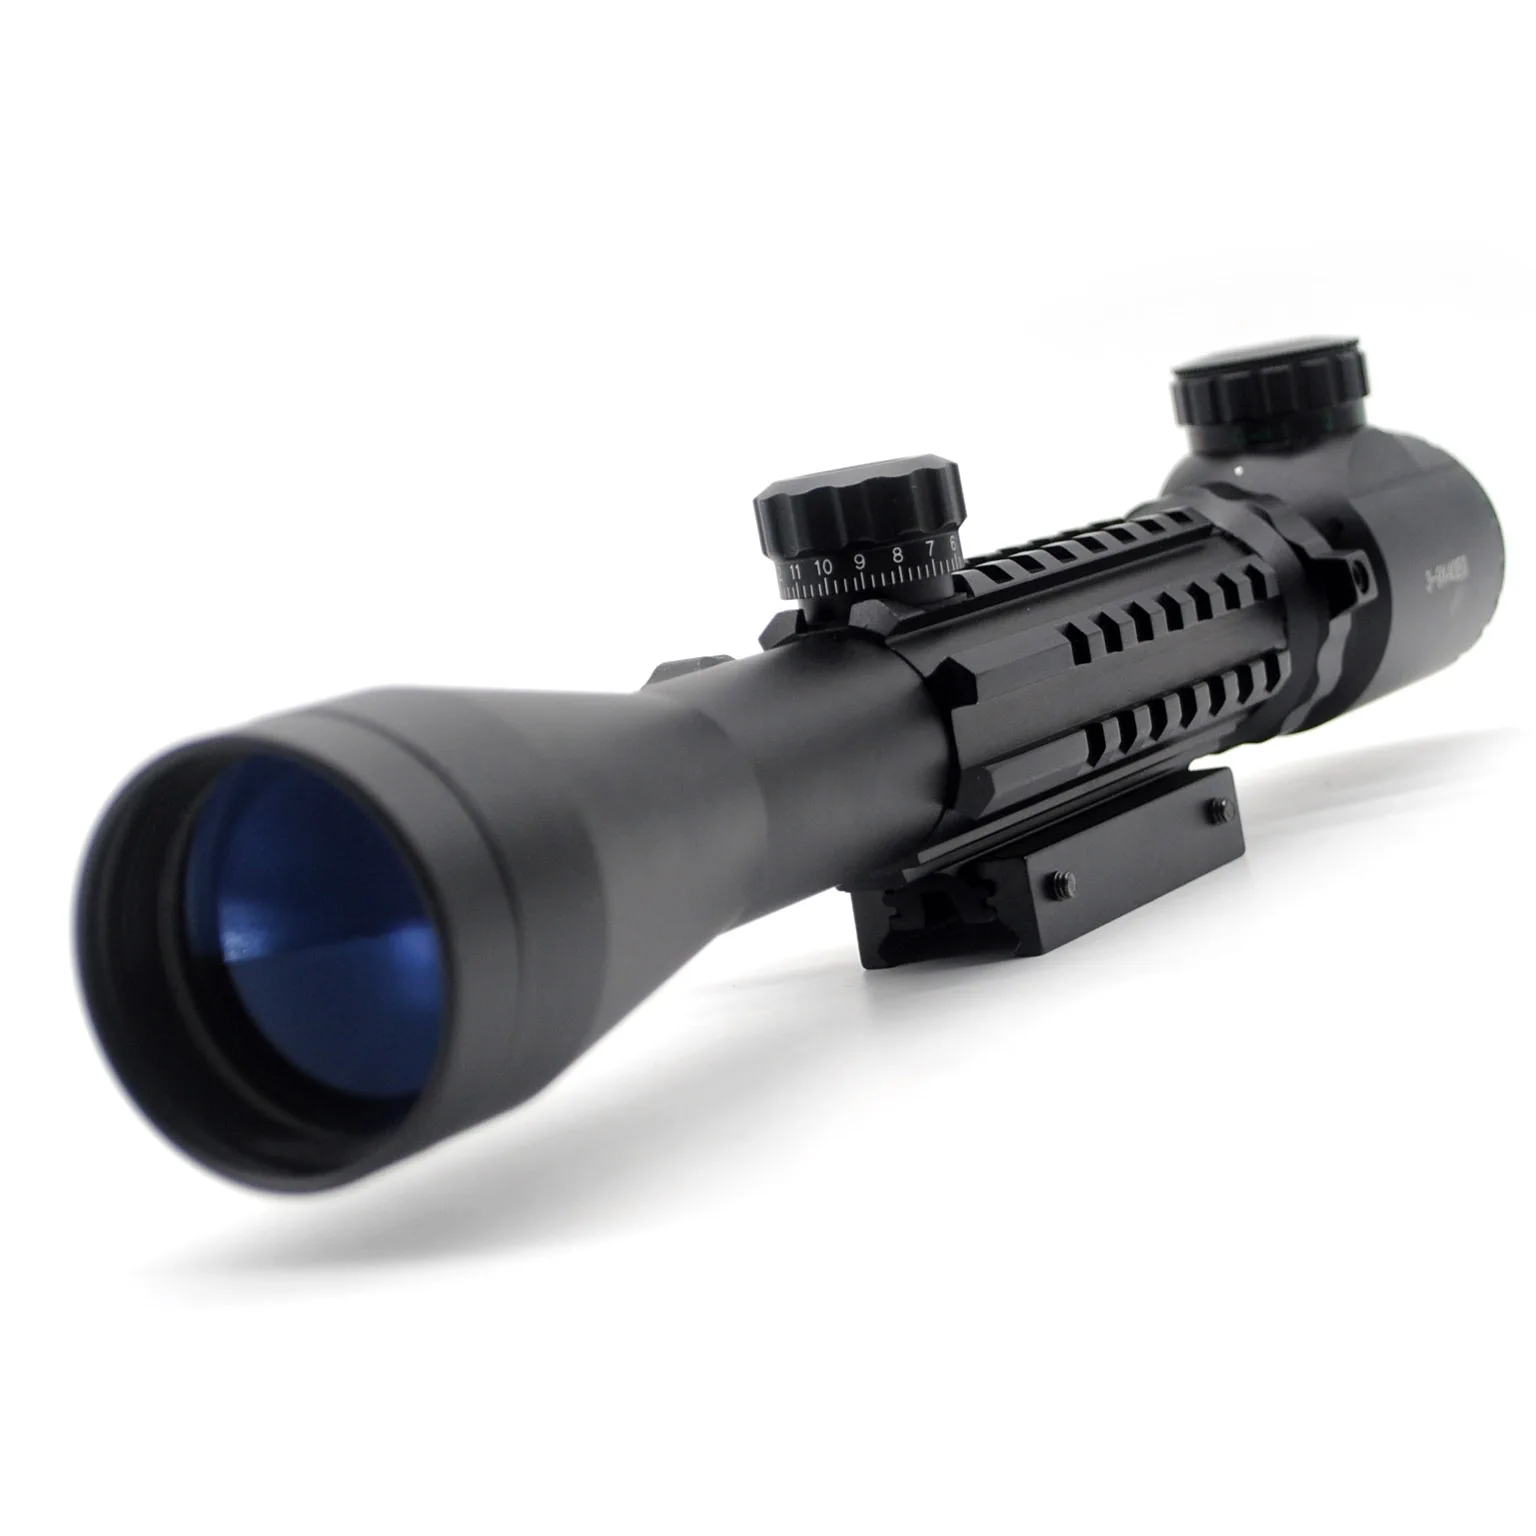 

Aplus Hunting Riflescope 3-9x40EG Red & Green Illuminated Rifle reflex sight Scope with 20mm picatinny rail mount, Black